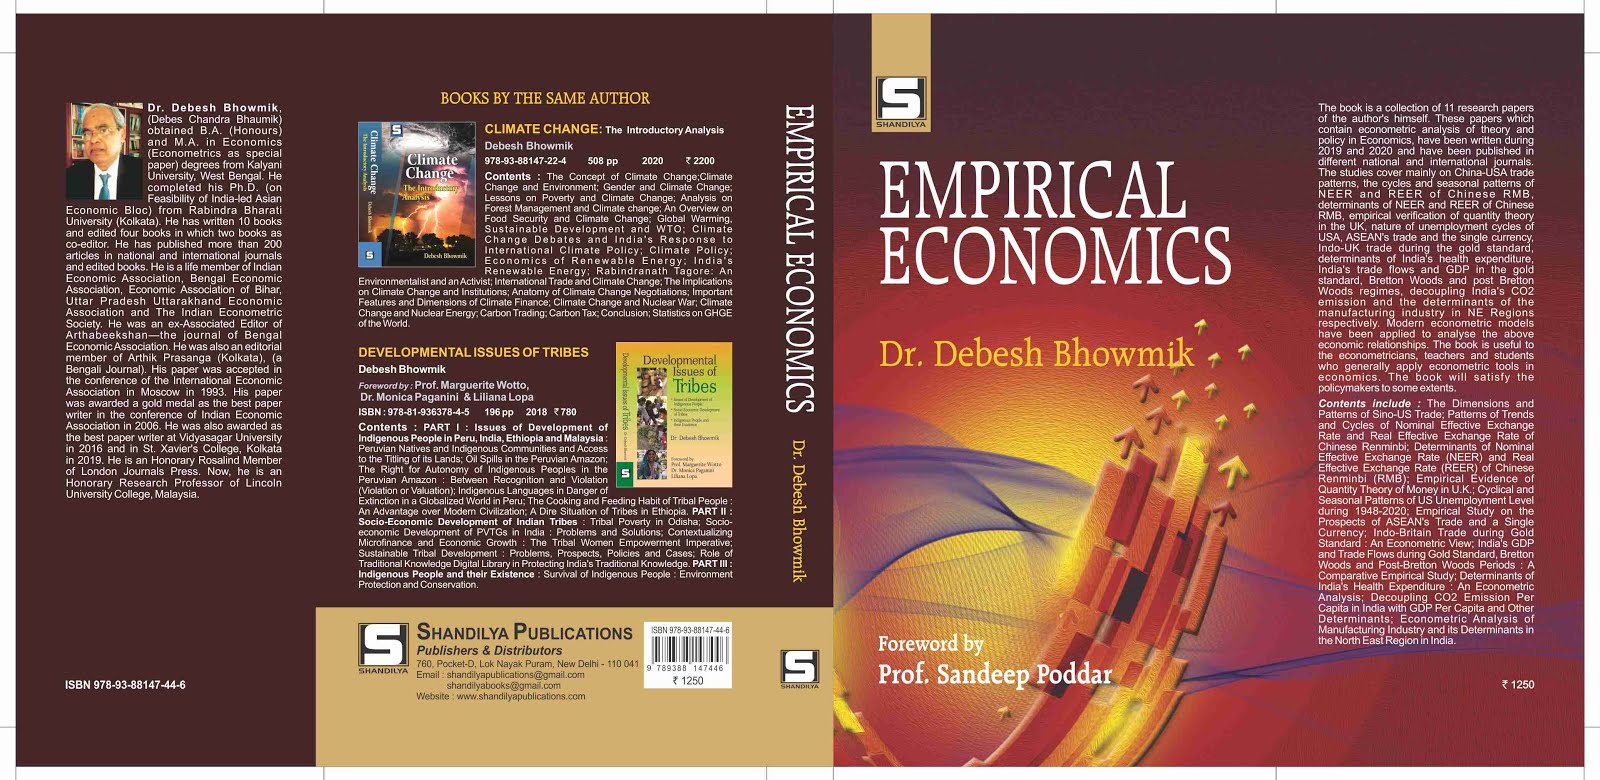 EMPIRICAL ECONOMICS